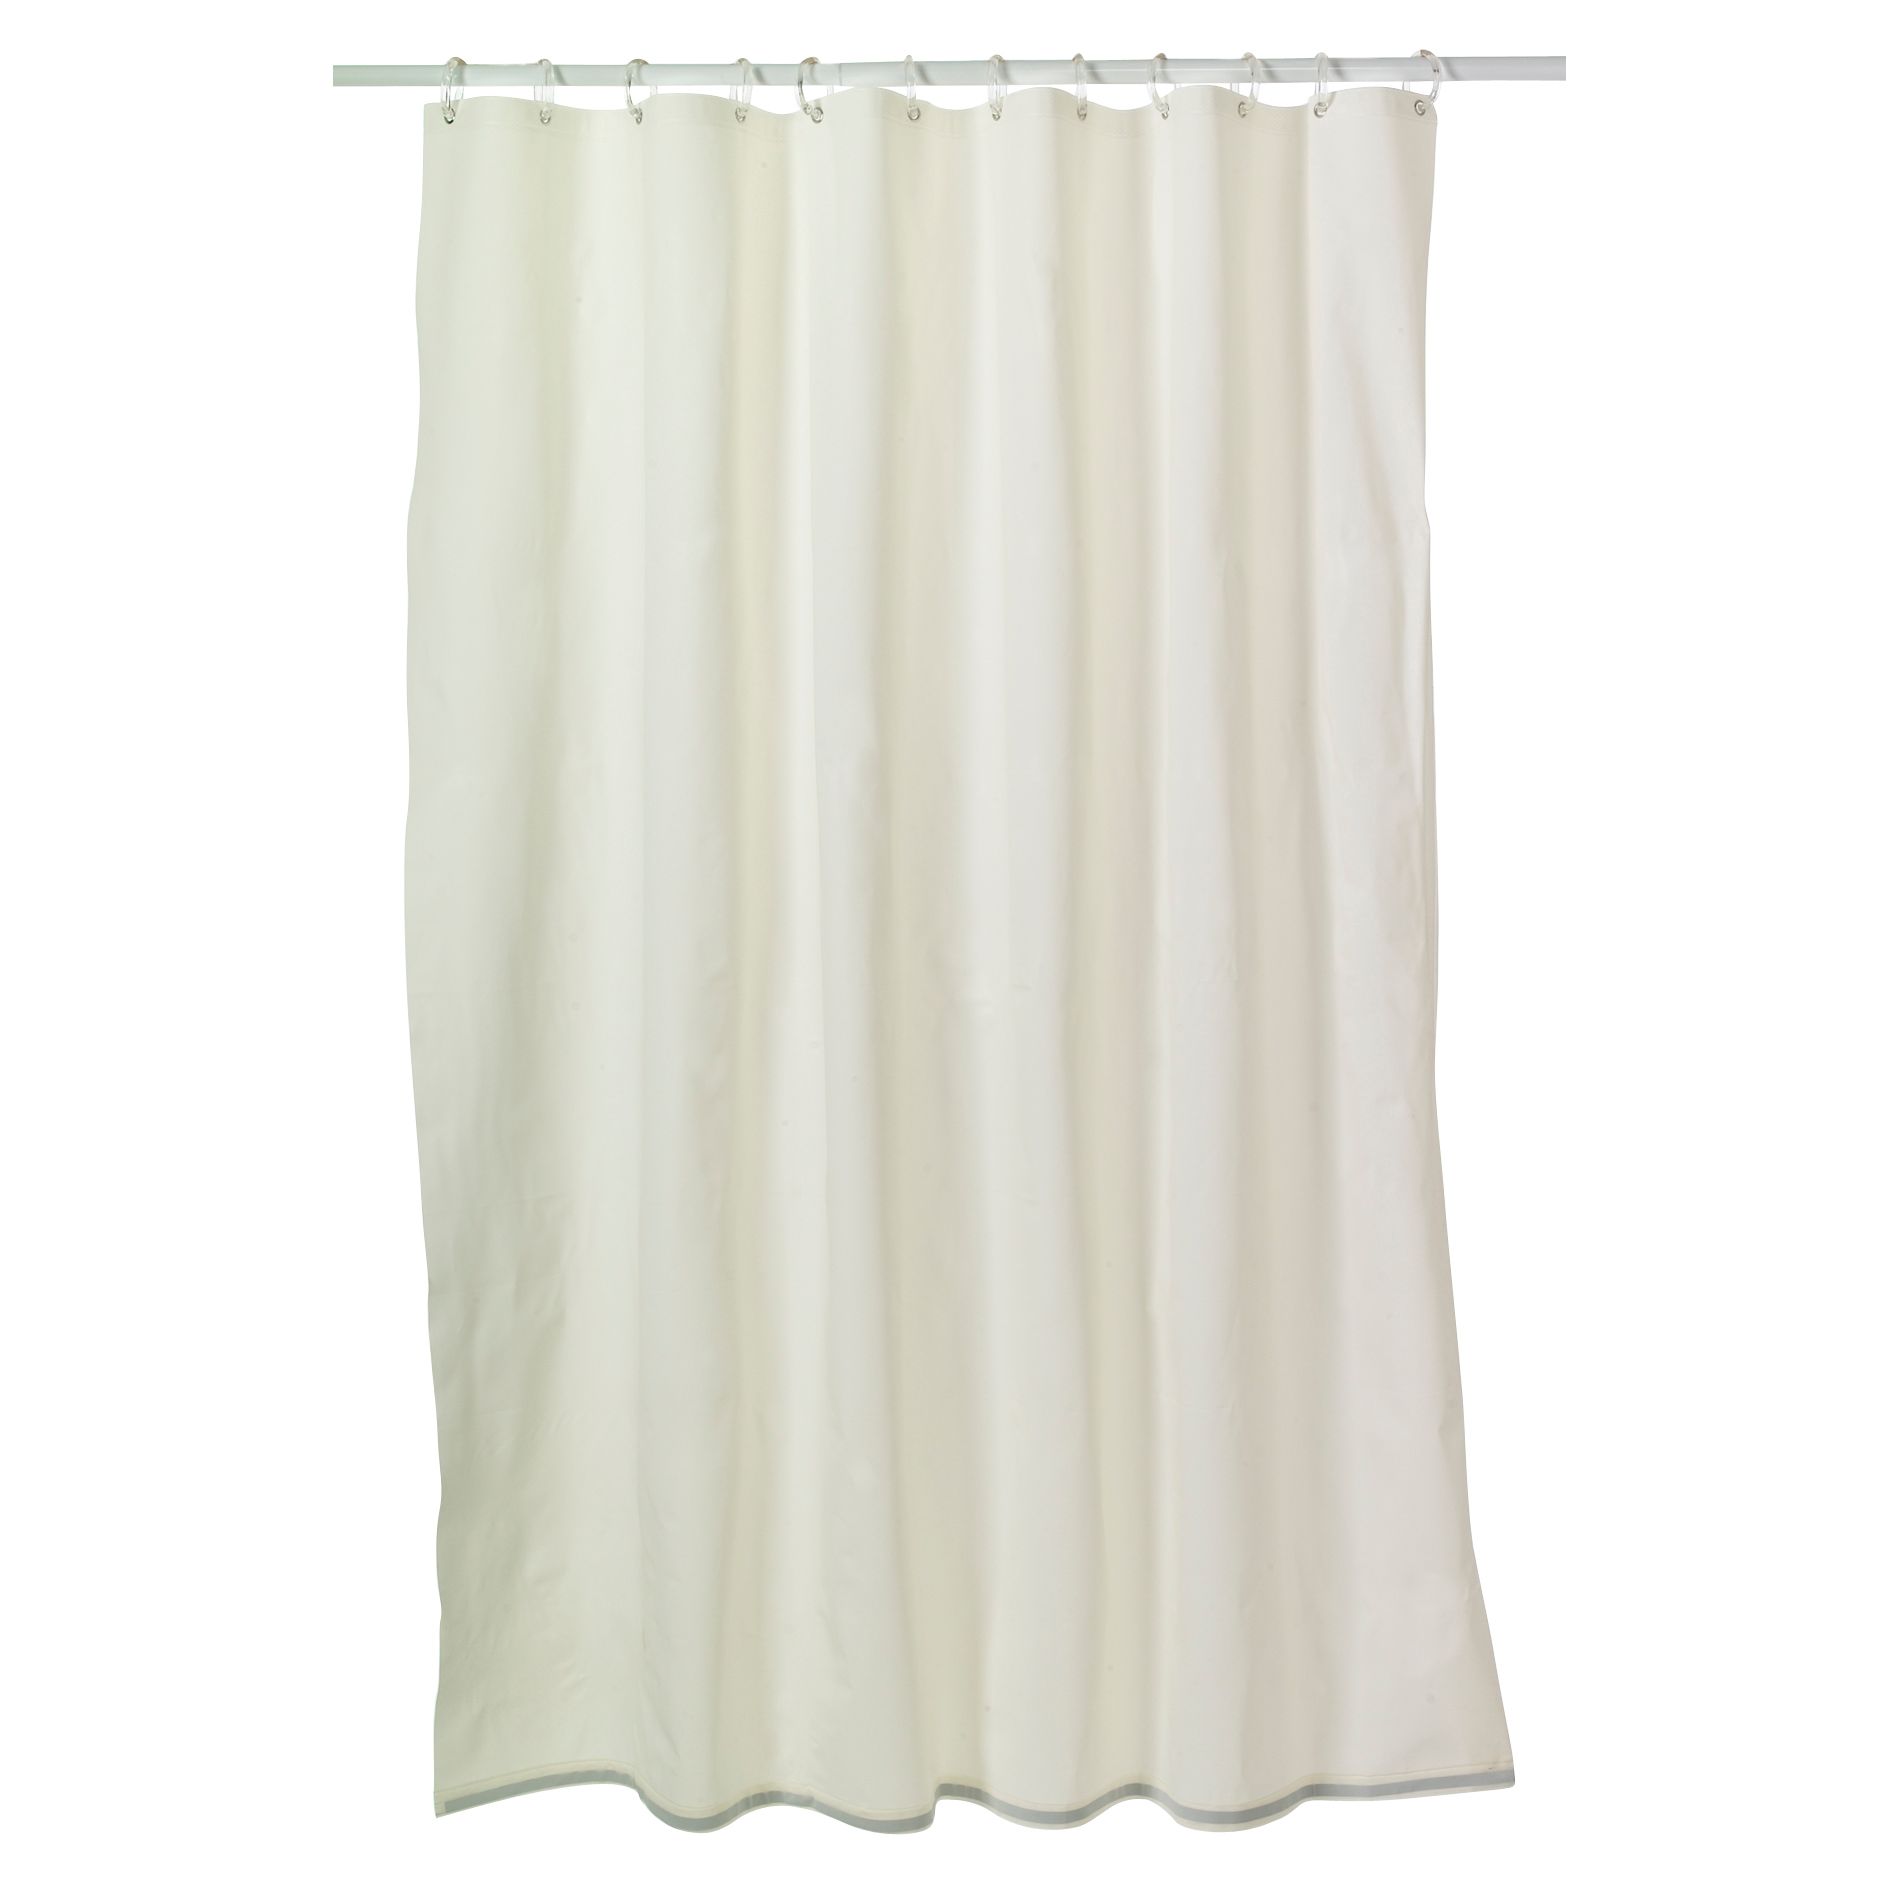 Essential Home Shower Curtain Liner 8 Gauge - Peva